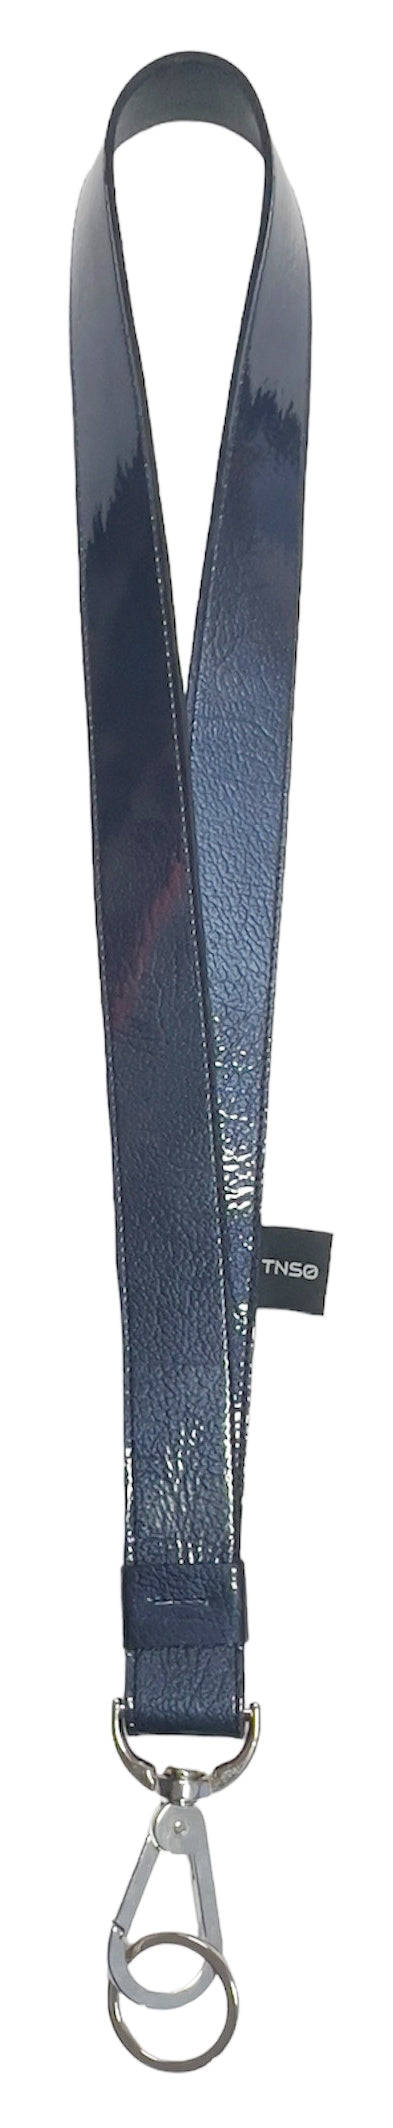  Tnso Portachiavi Leather Lanyard Limited Edition Metal Deep Blue Uomo - 1